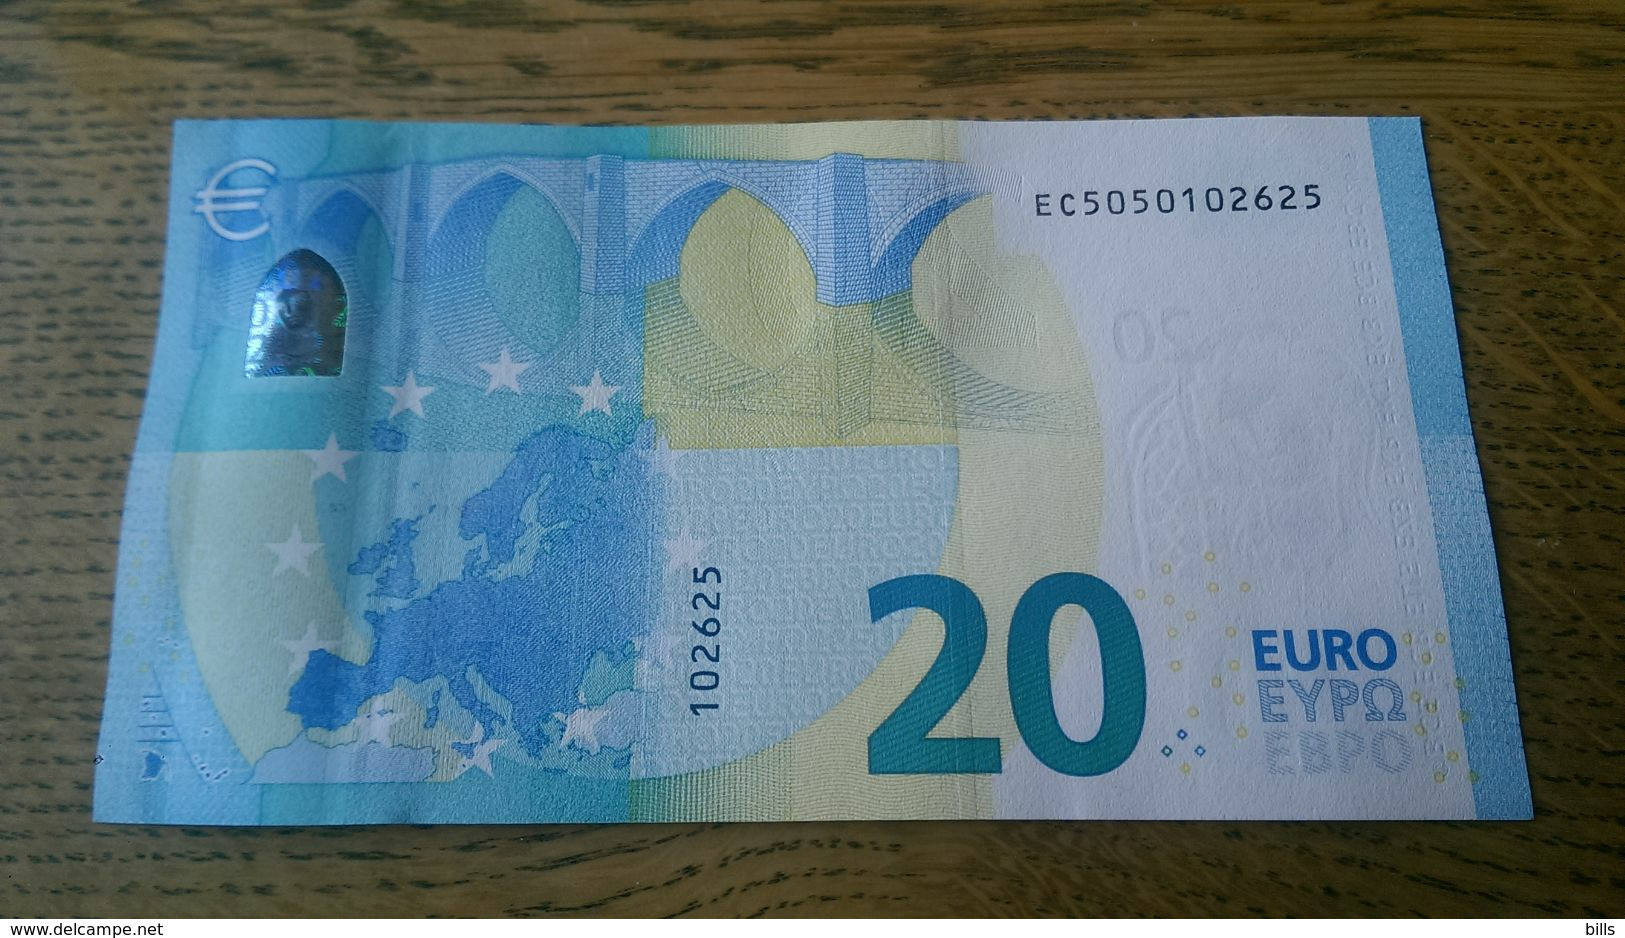 20 Euro Draghi 2015 E007E5 EC 100% UNC - 20 Euro